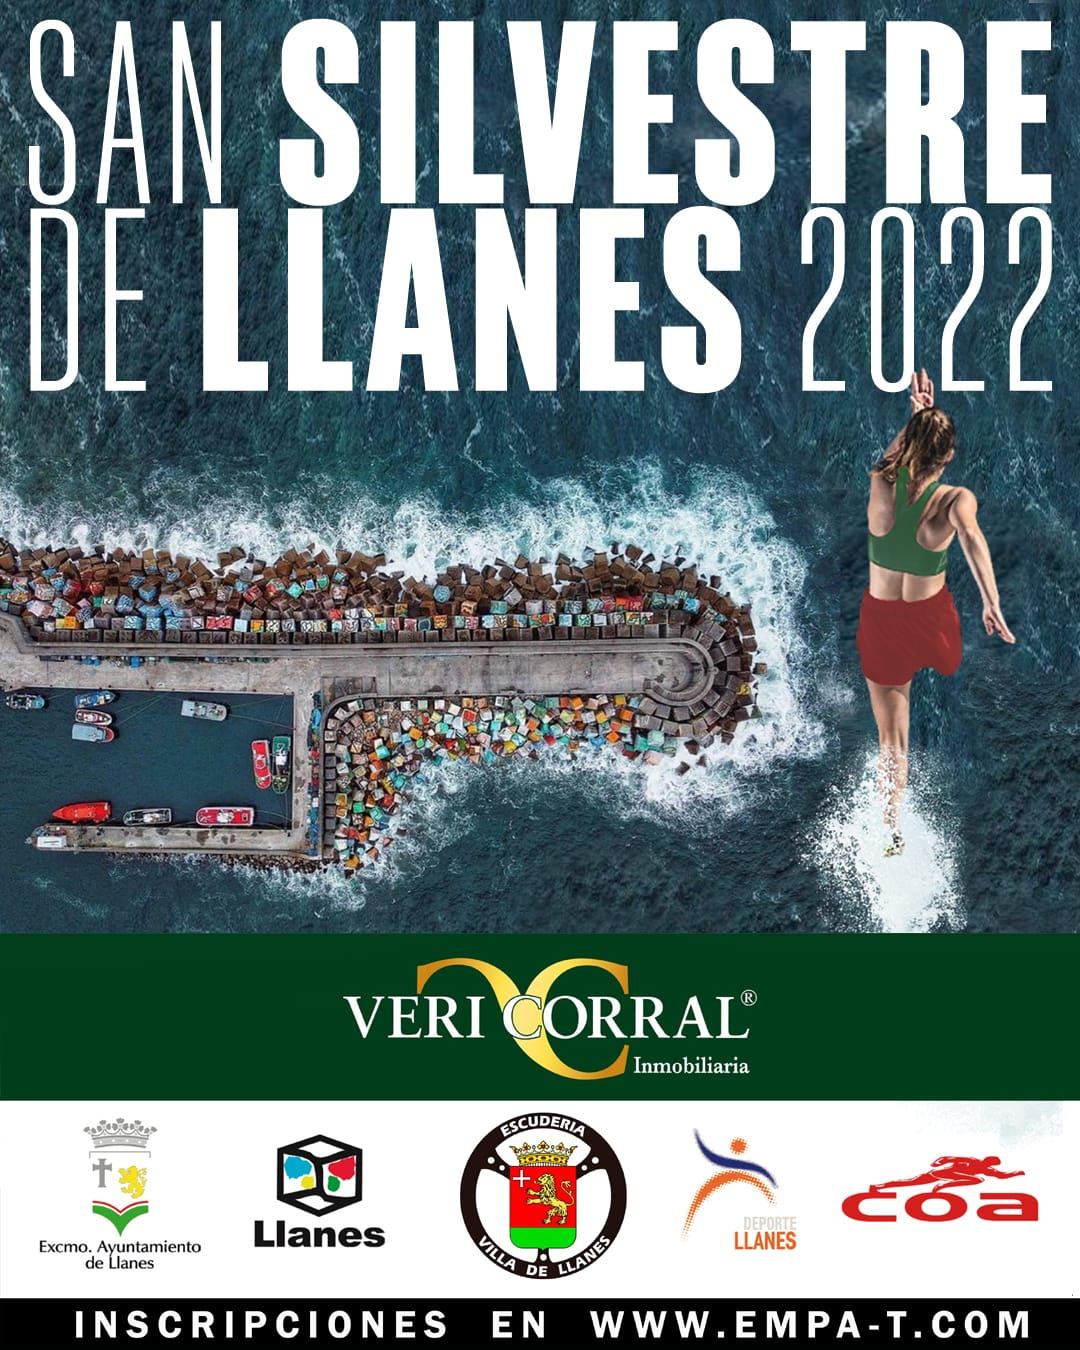 SAN SILVESTRE LLANES 2022 - Inscríbete